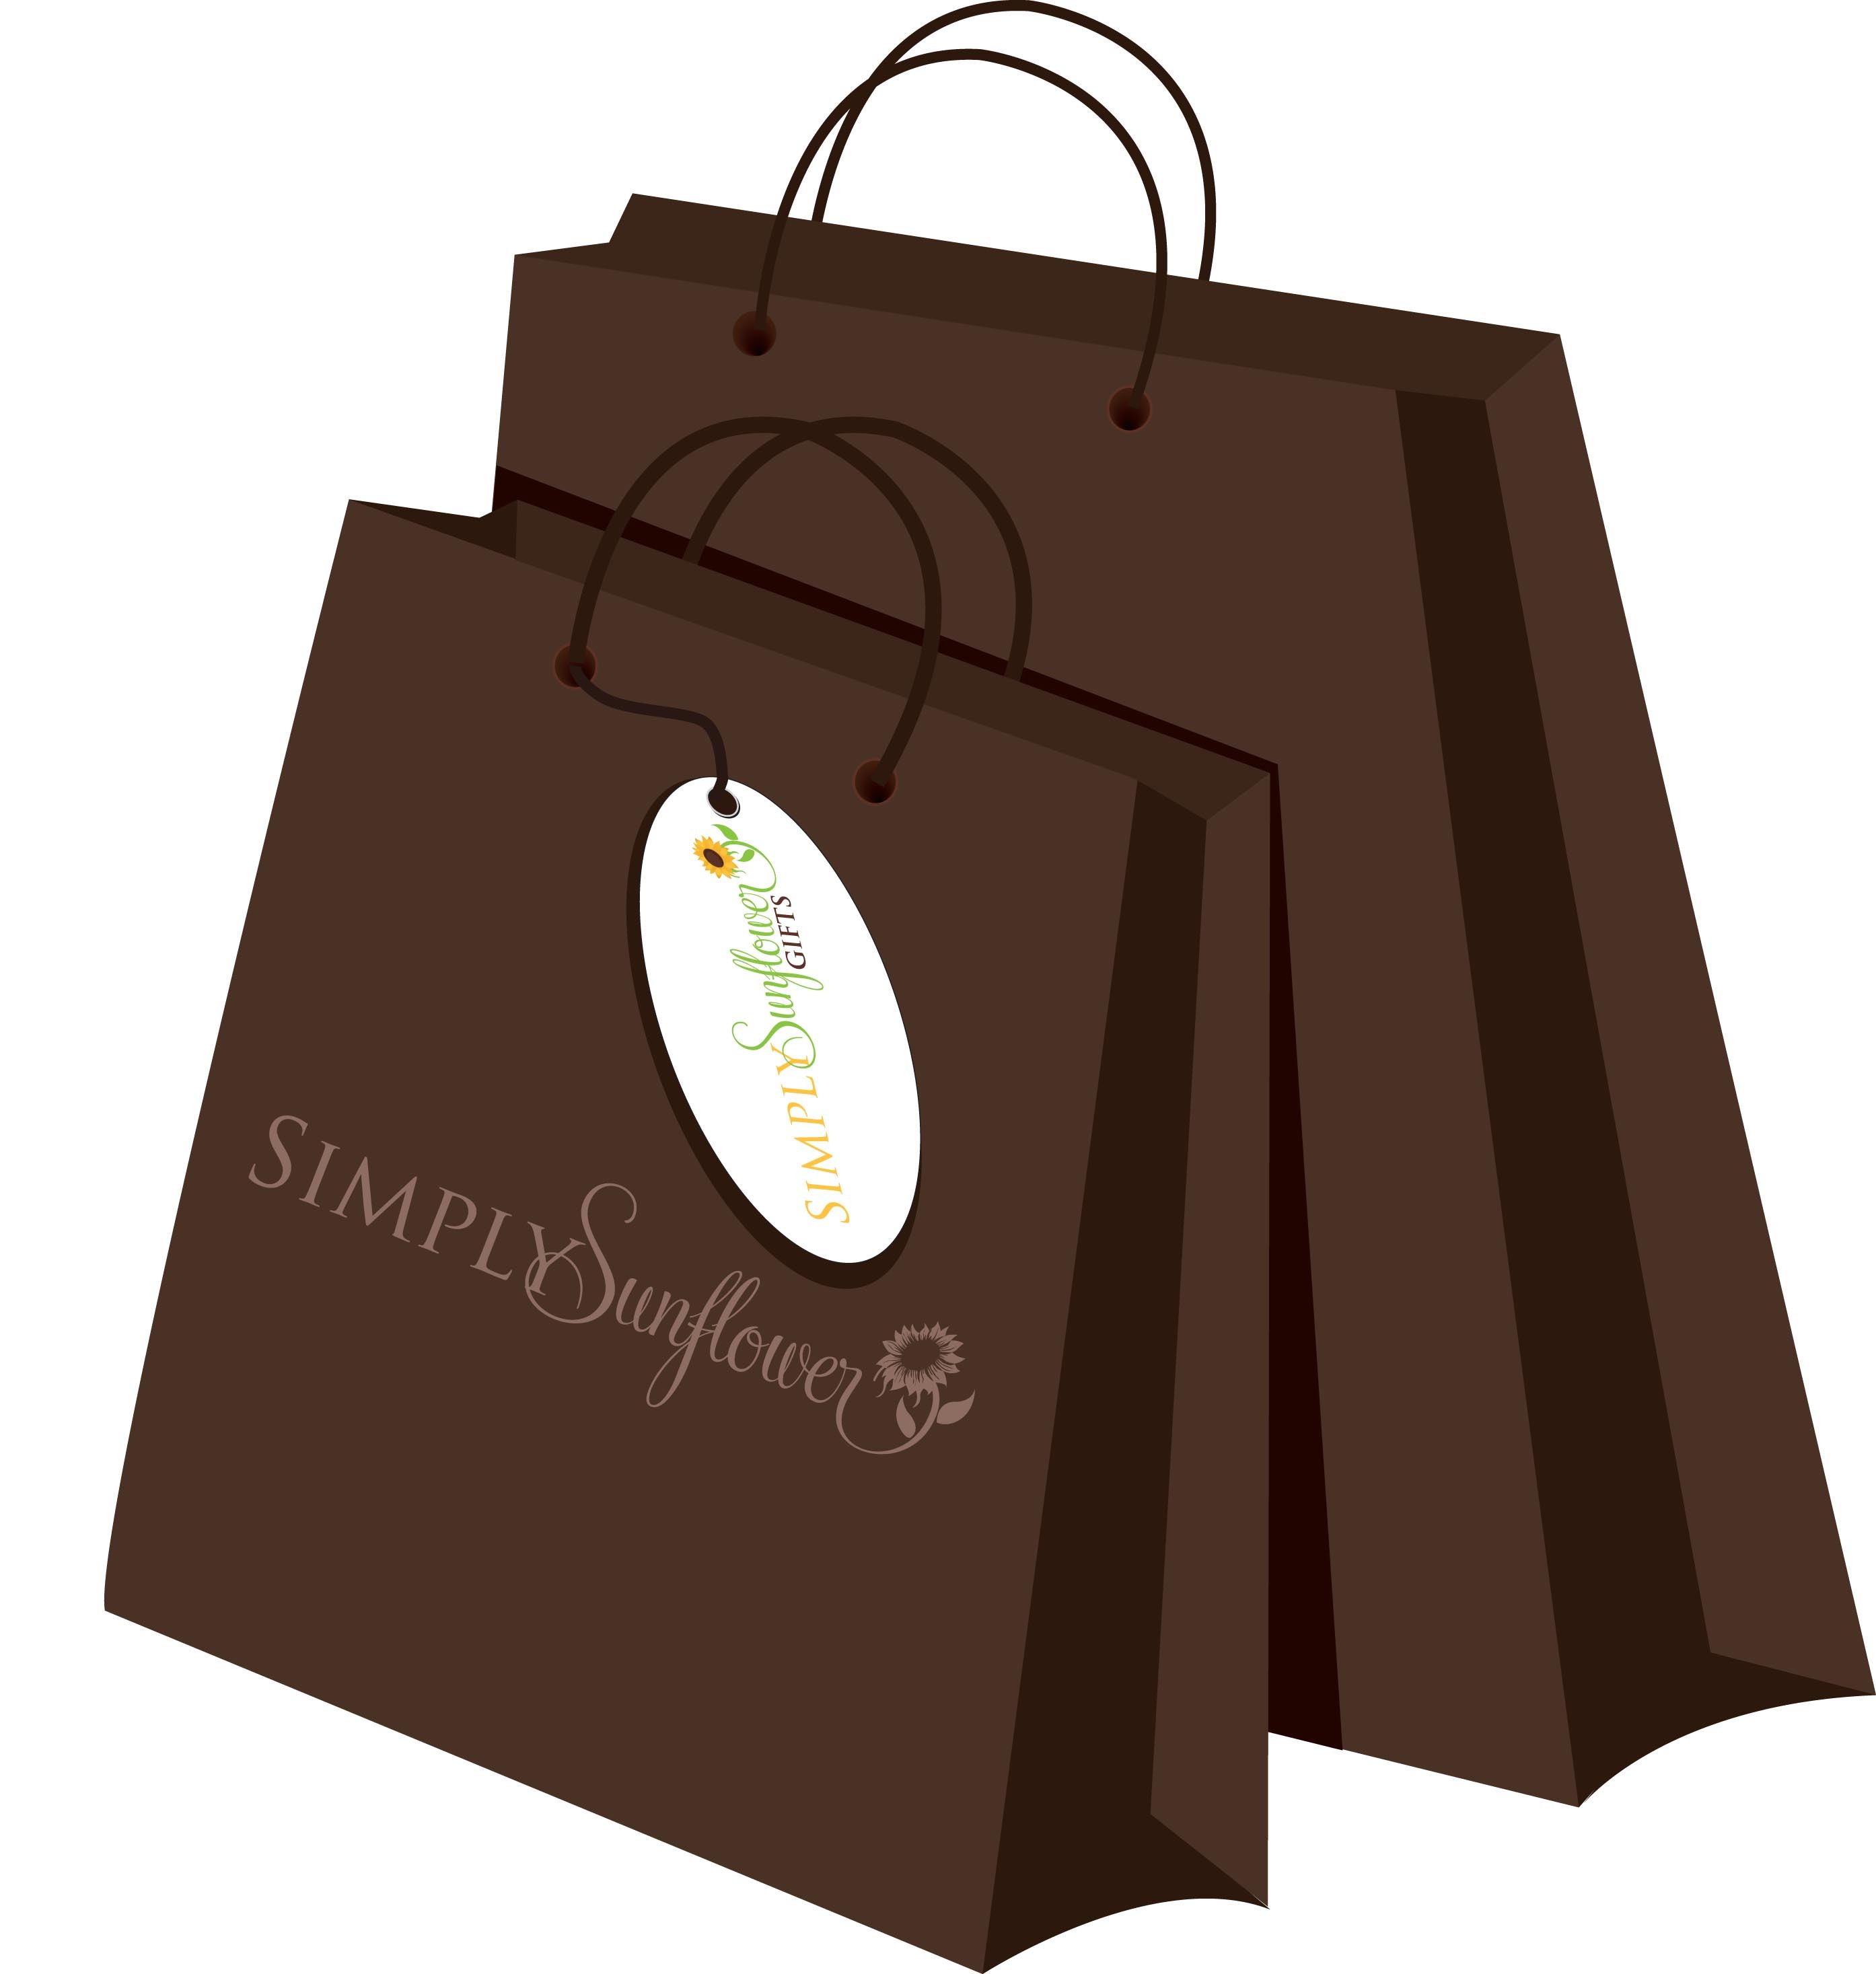 Shopping bag design